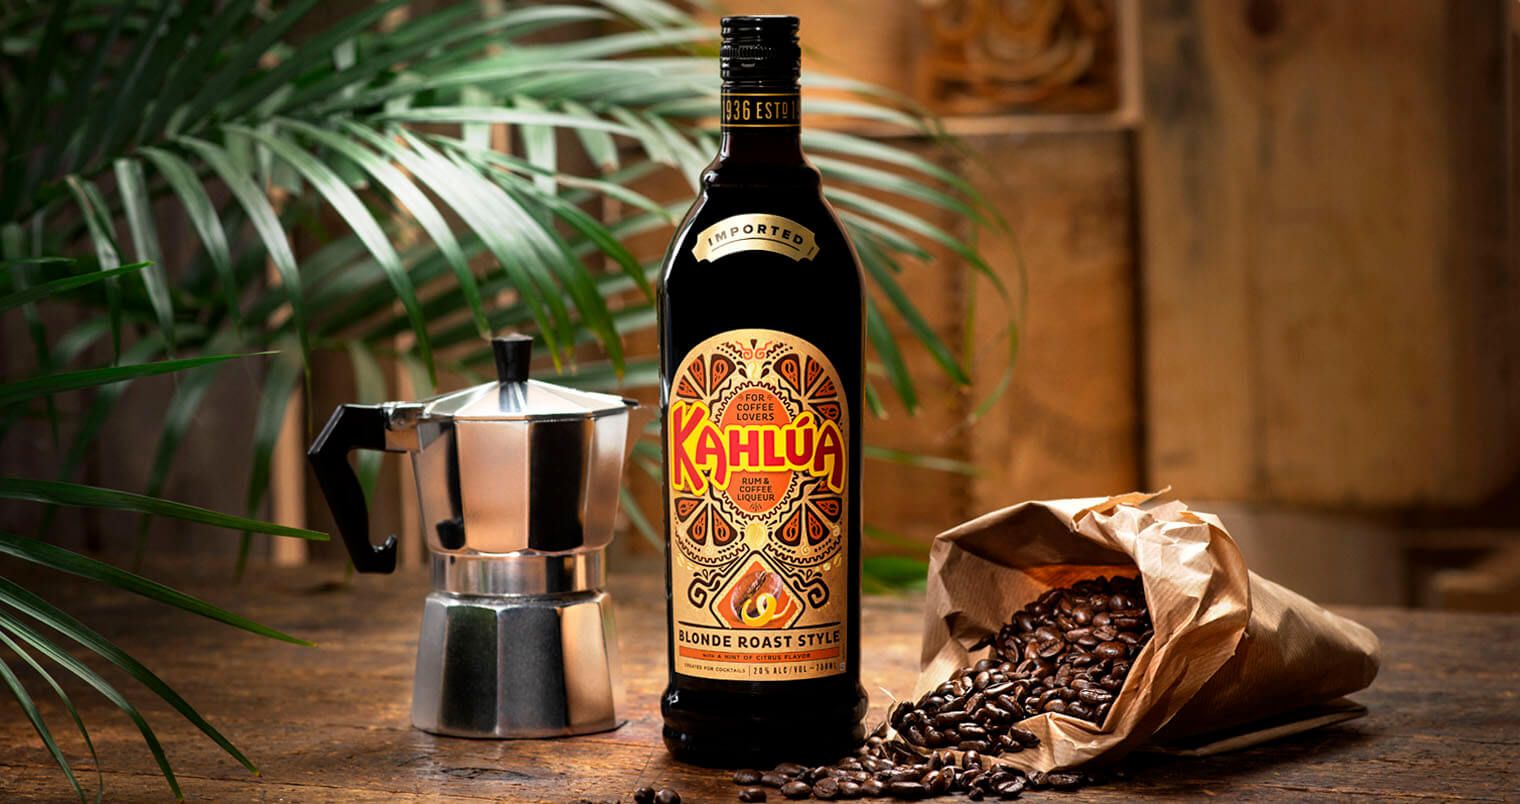 Kahlúa Blonde Roast Style, bottle, perculator, coffee beans, featured image